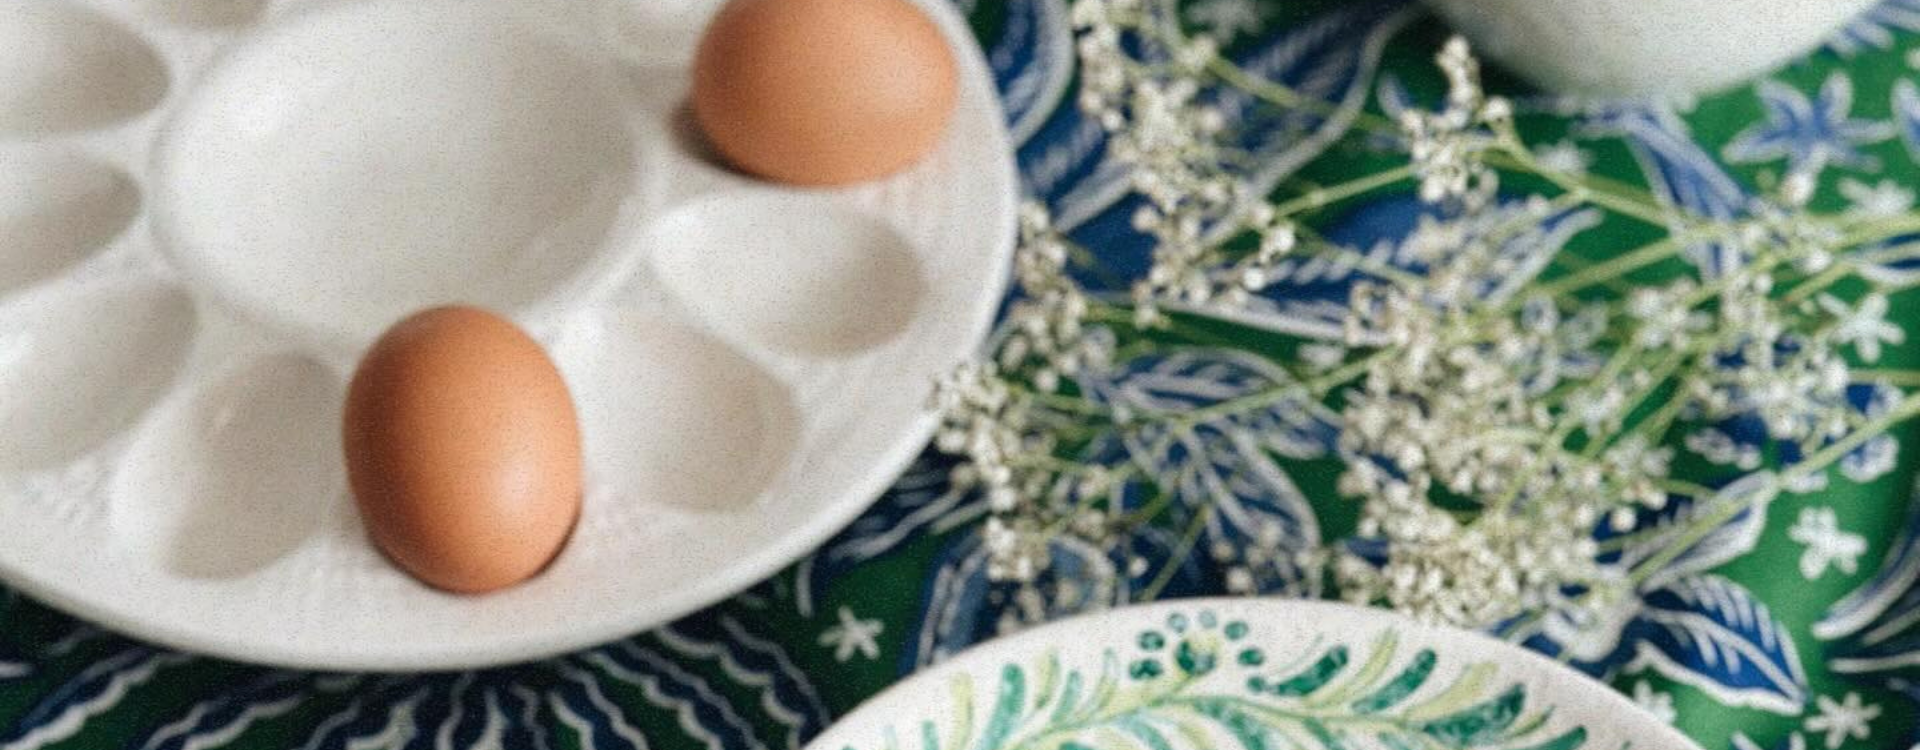 Platos espectaculares para huevos rellenos: Perfectos para brunchs veraniegos